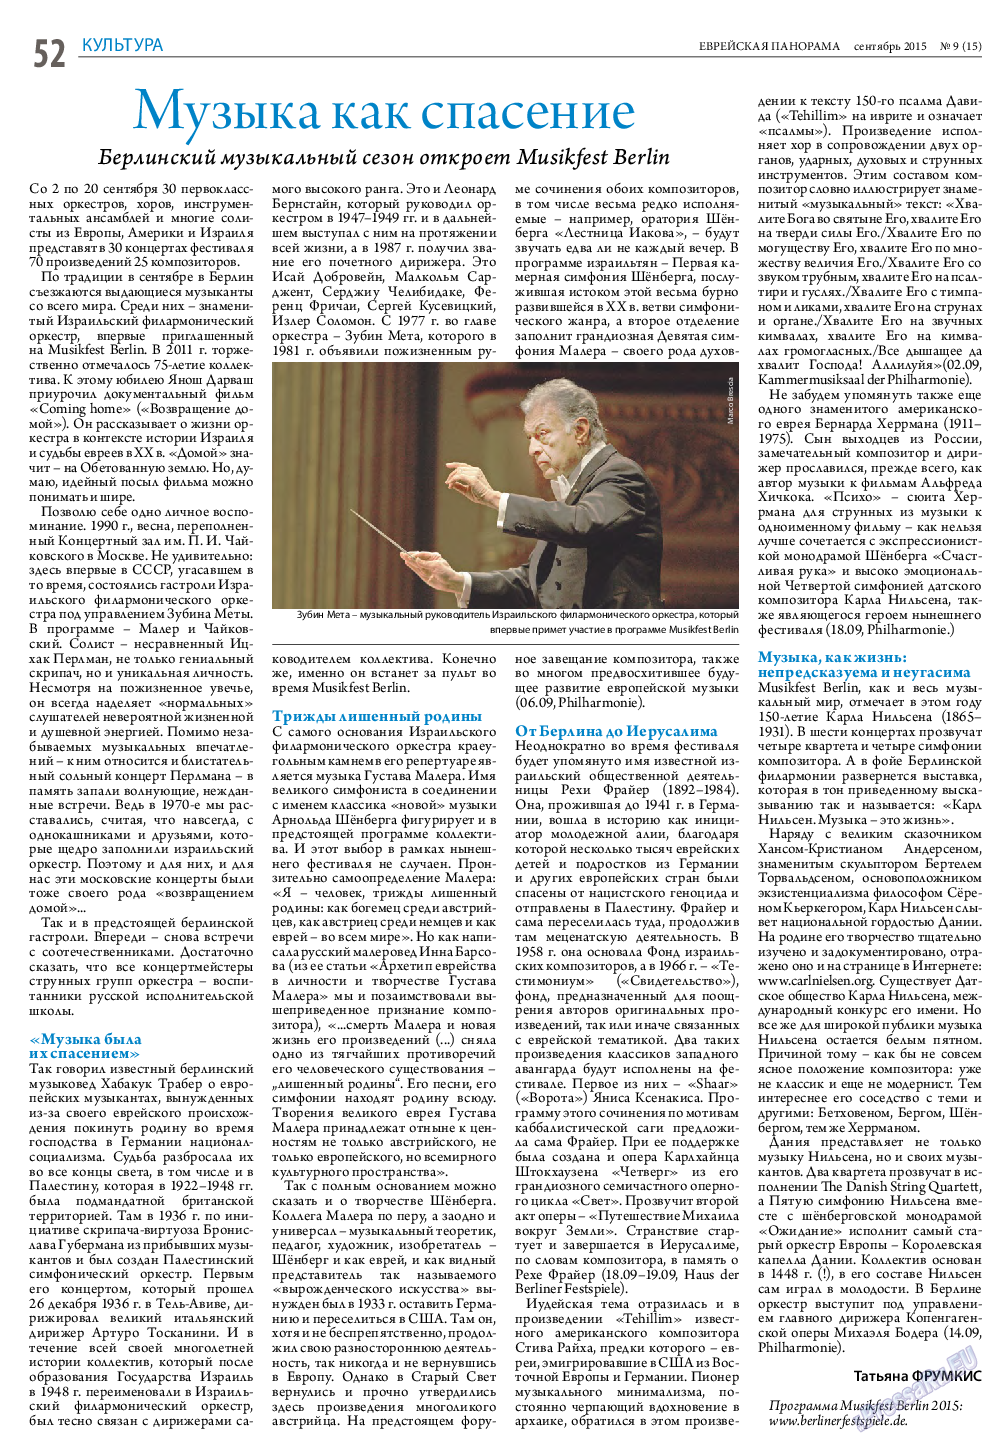 Еврейская панорама, газета. 2015 №9 стр.52